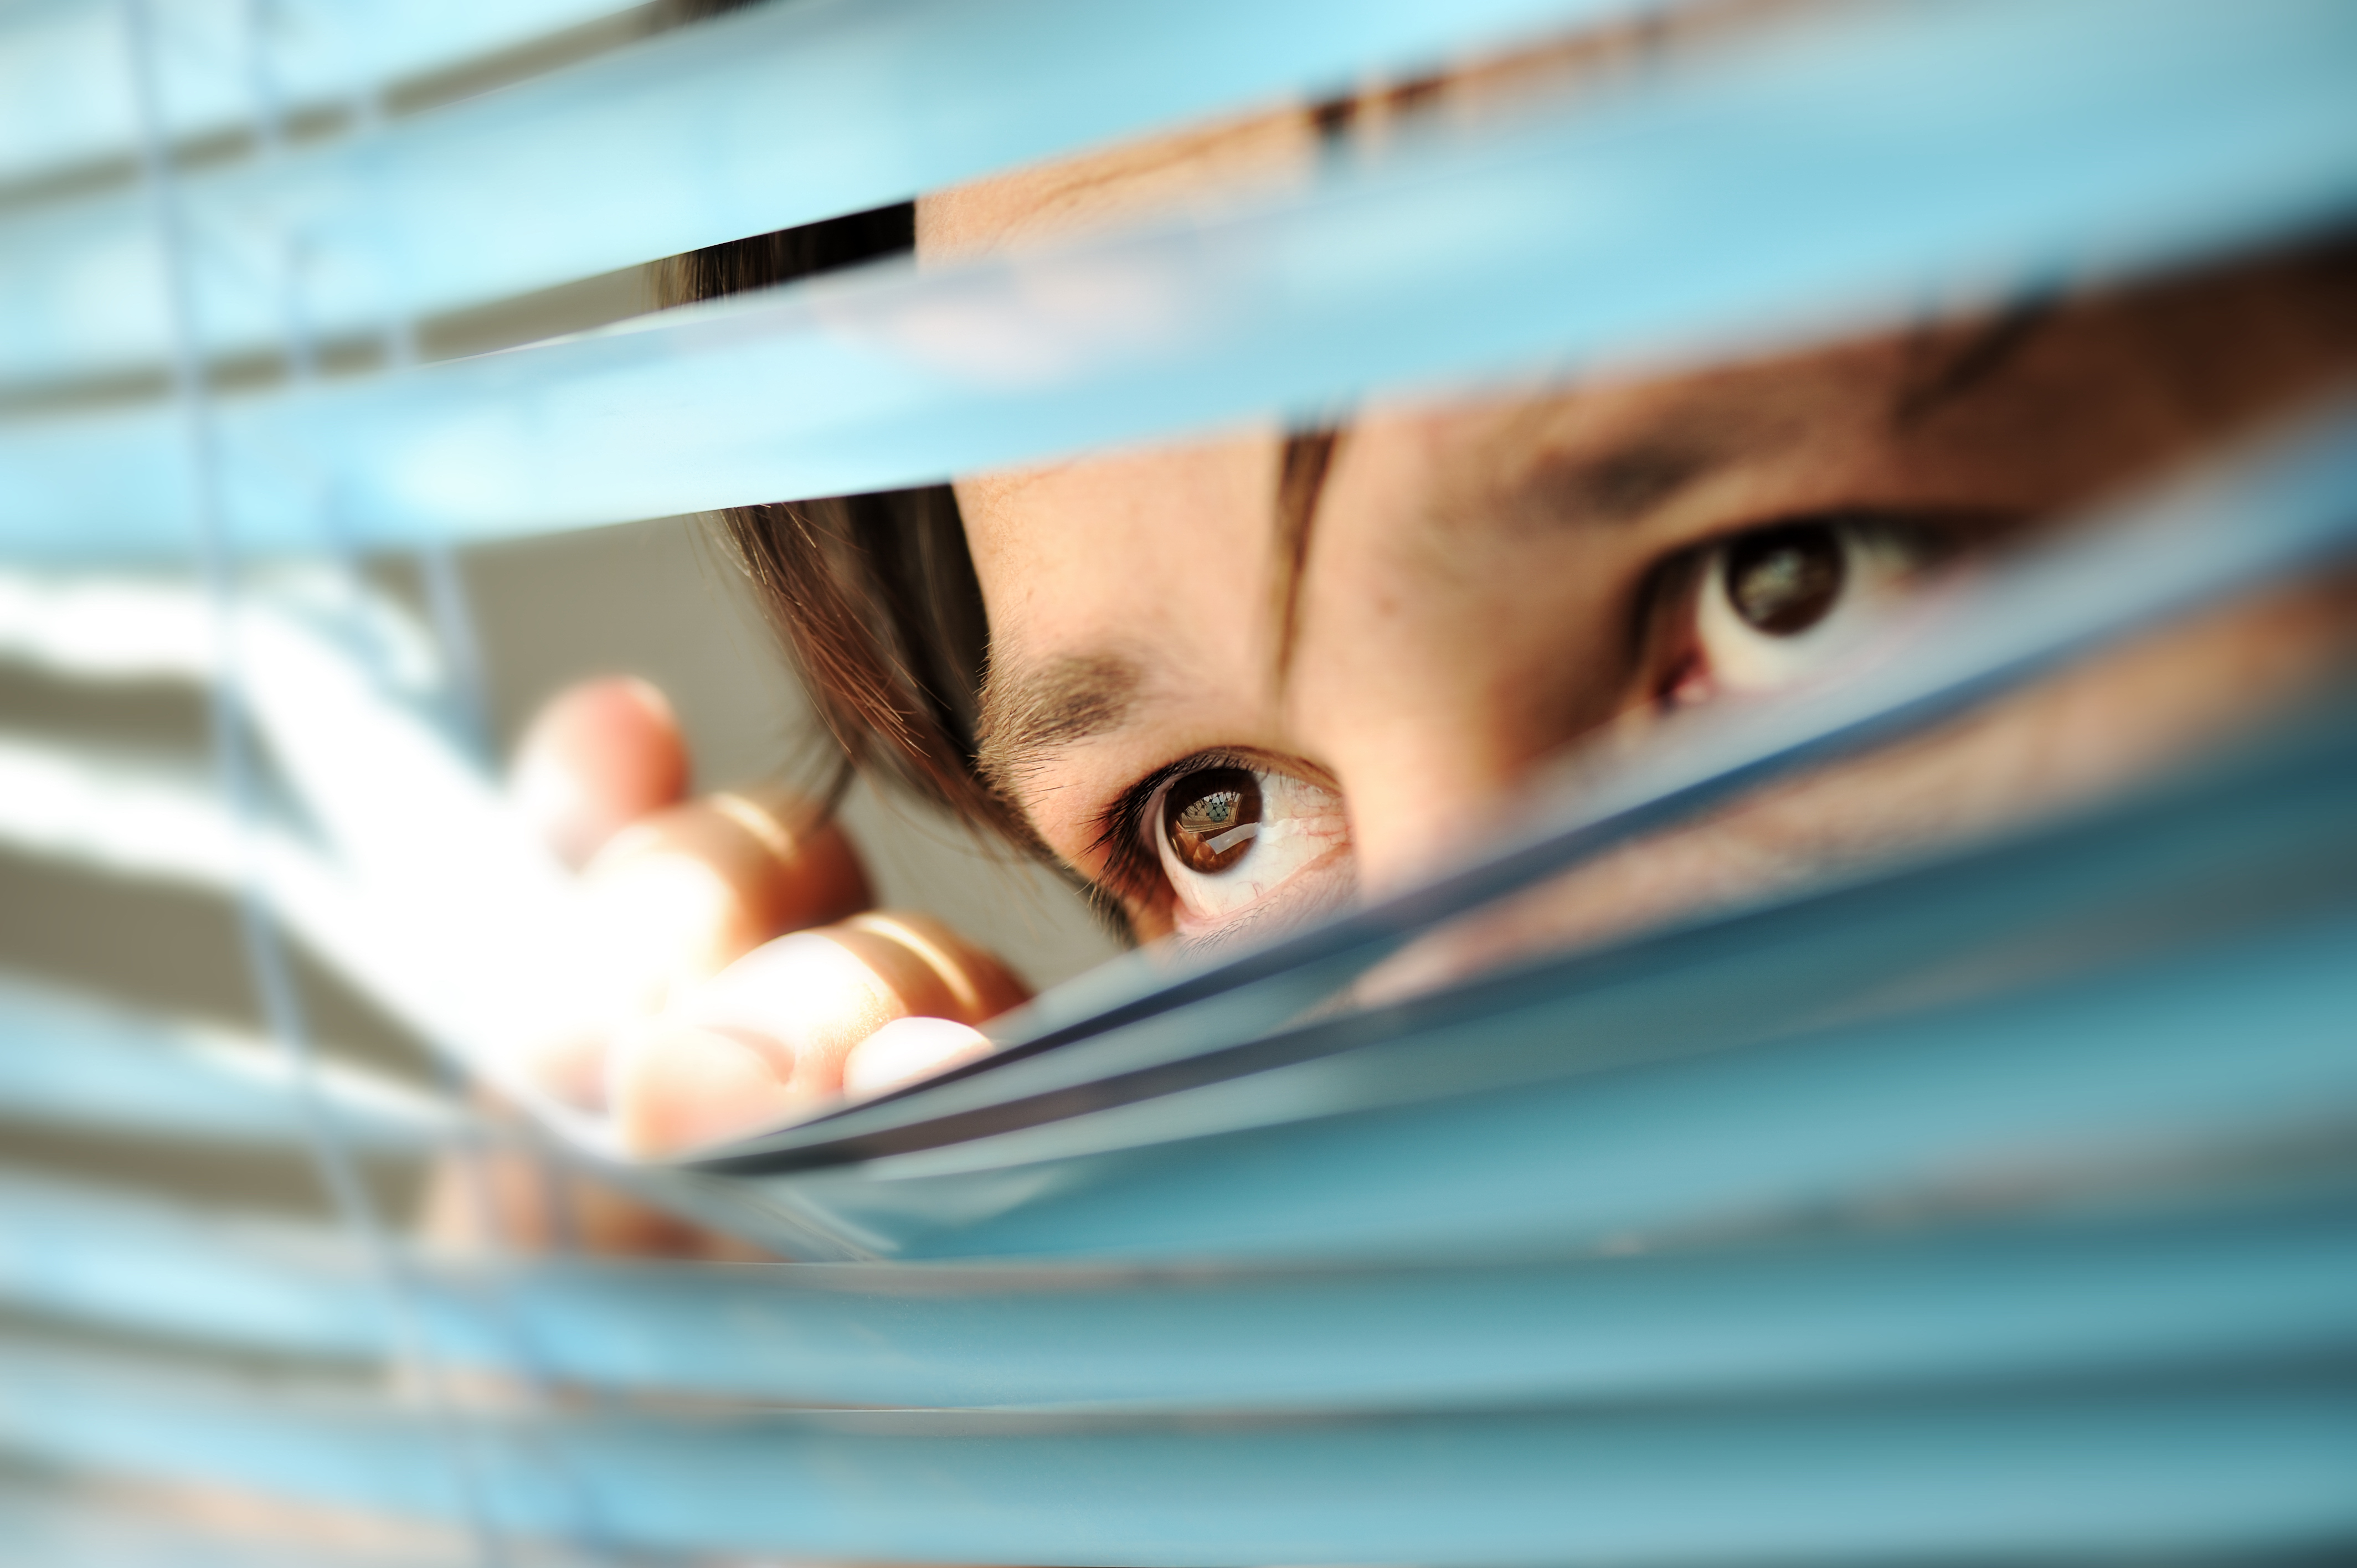 Man looking through window blinds. | Source: Shutterstock